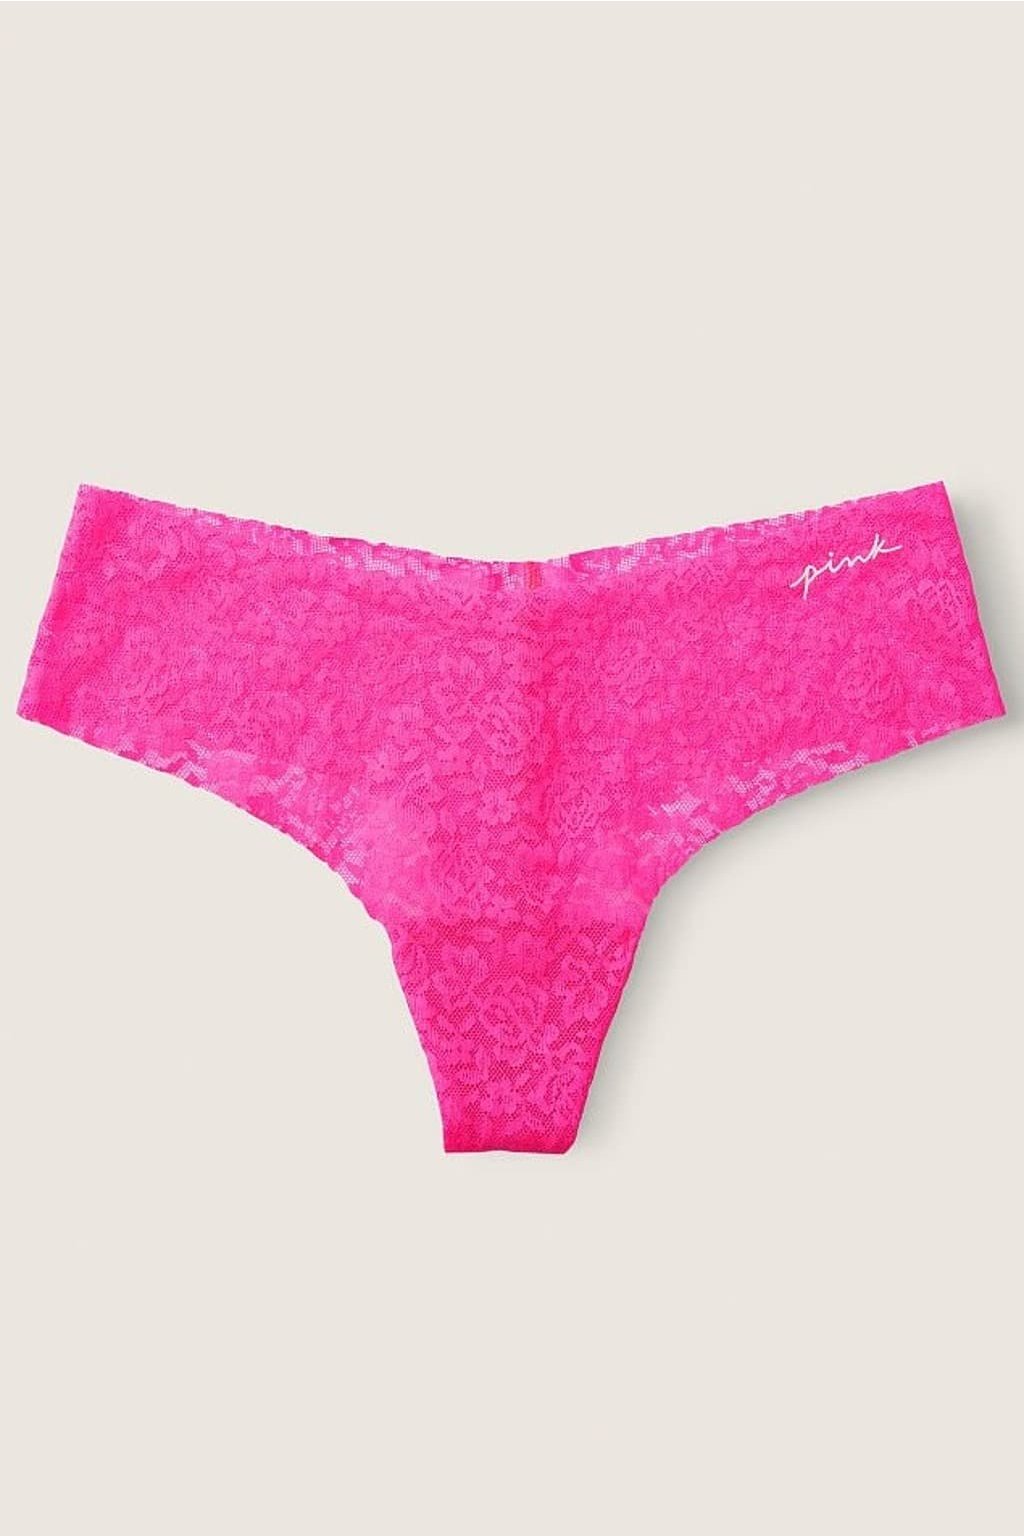 Tangá Victoria's Secret PINK No show Lace atomic pink